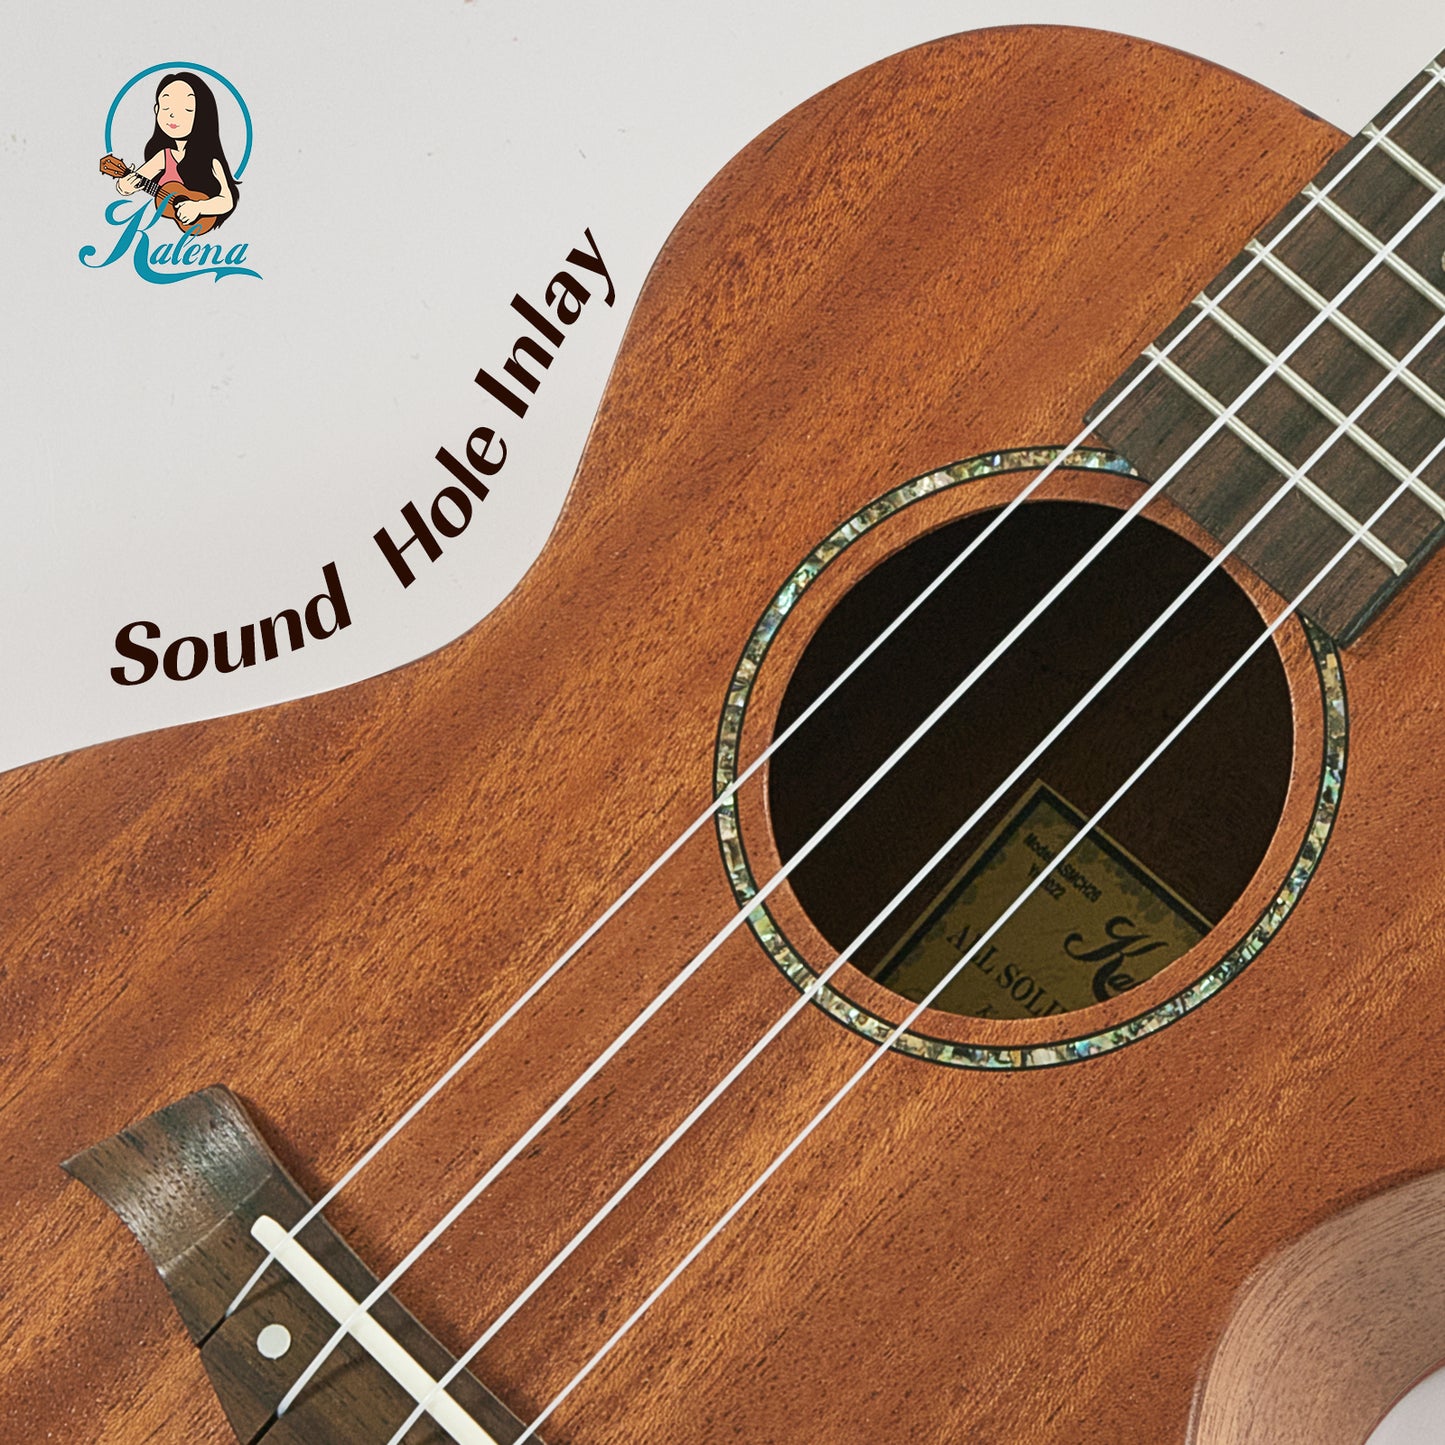 Kalena All Solid Mahogany Classical head Tenor Ukulele Complete Set: Strings, Picks, Strap, Digital Tuner, Padded Case, Starter Guide